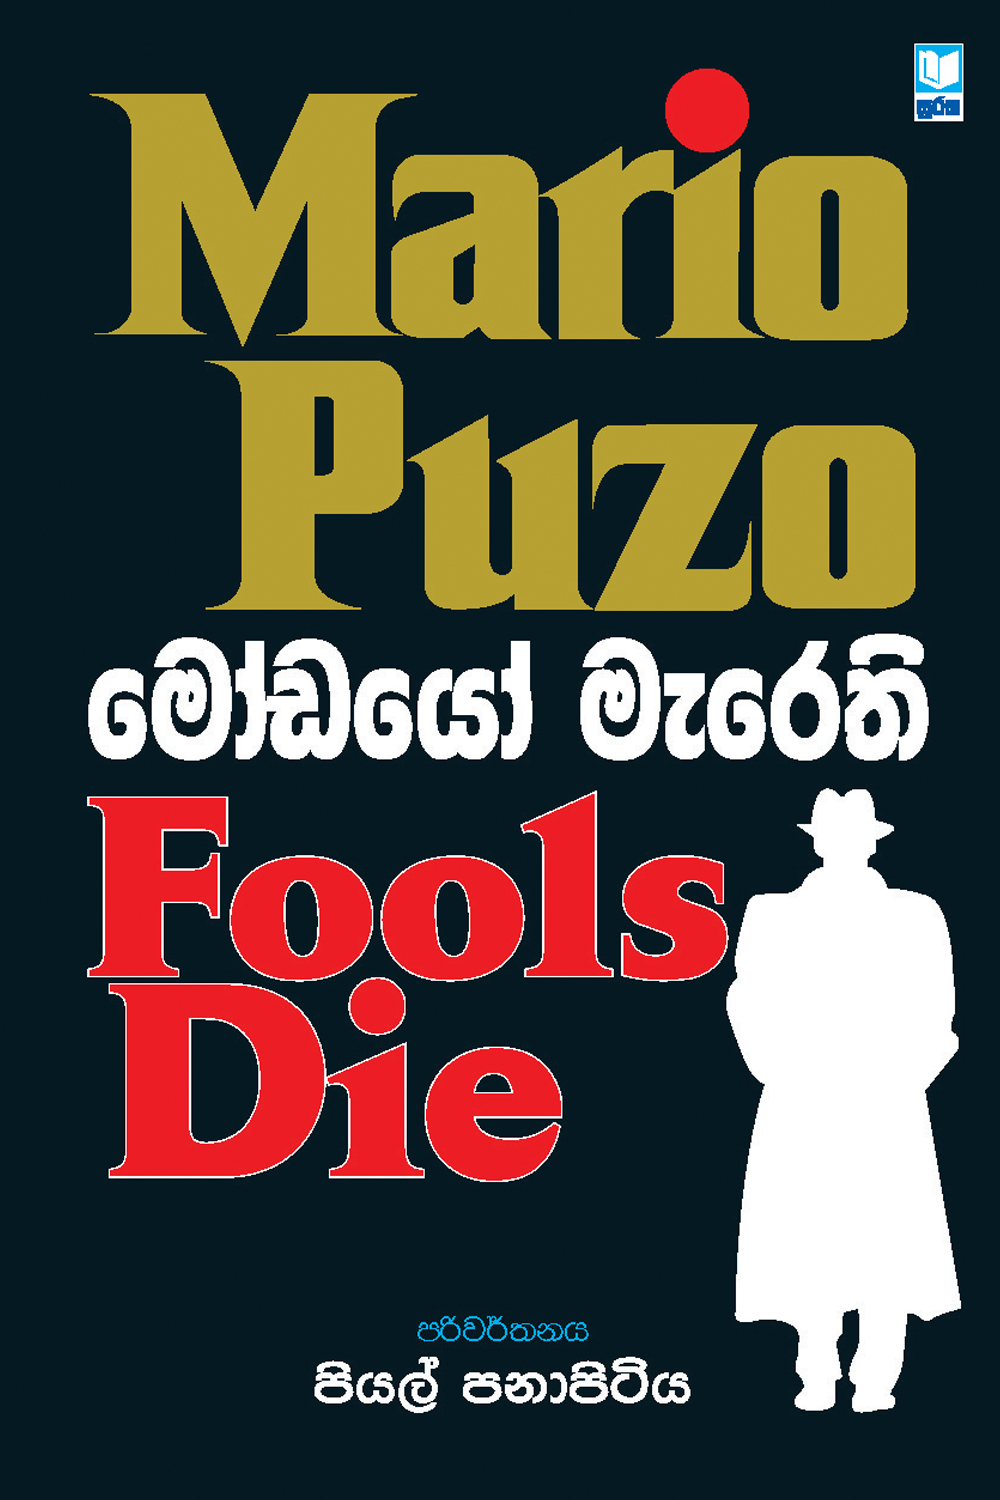 Modayo Marethi Translation of Fools Die by Mario Puzo